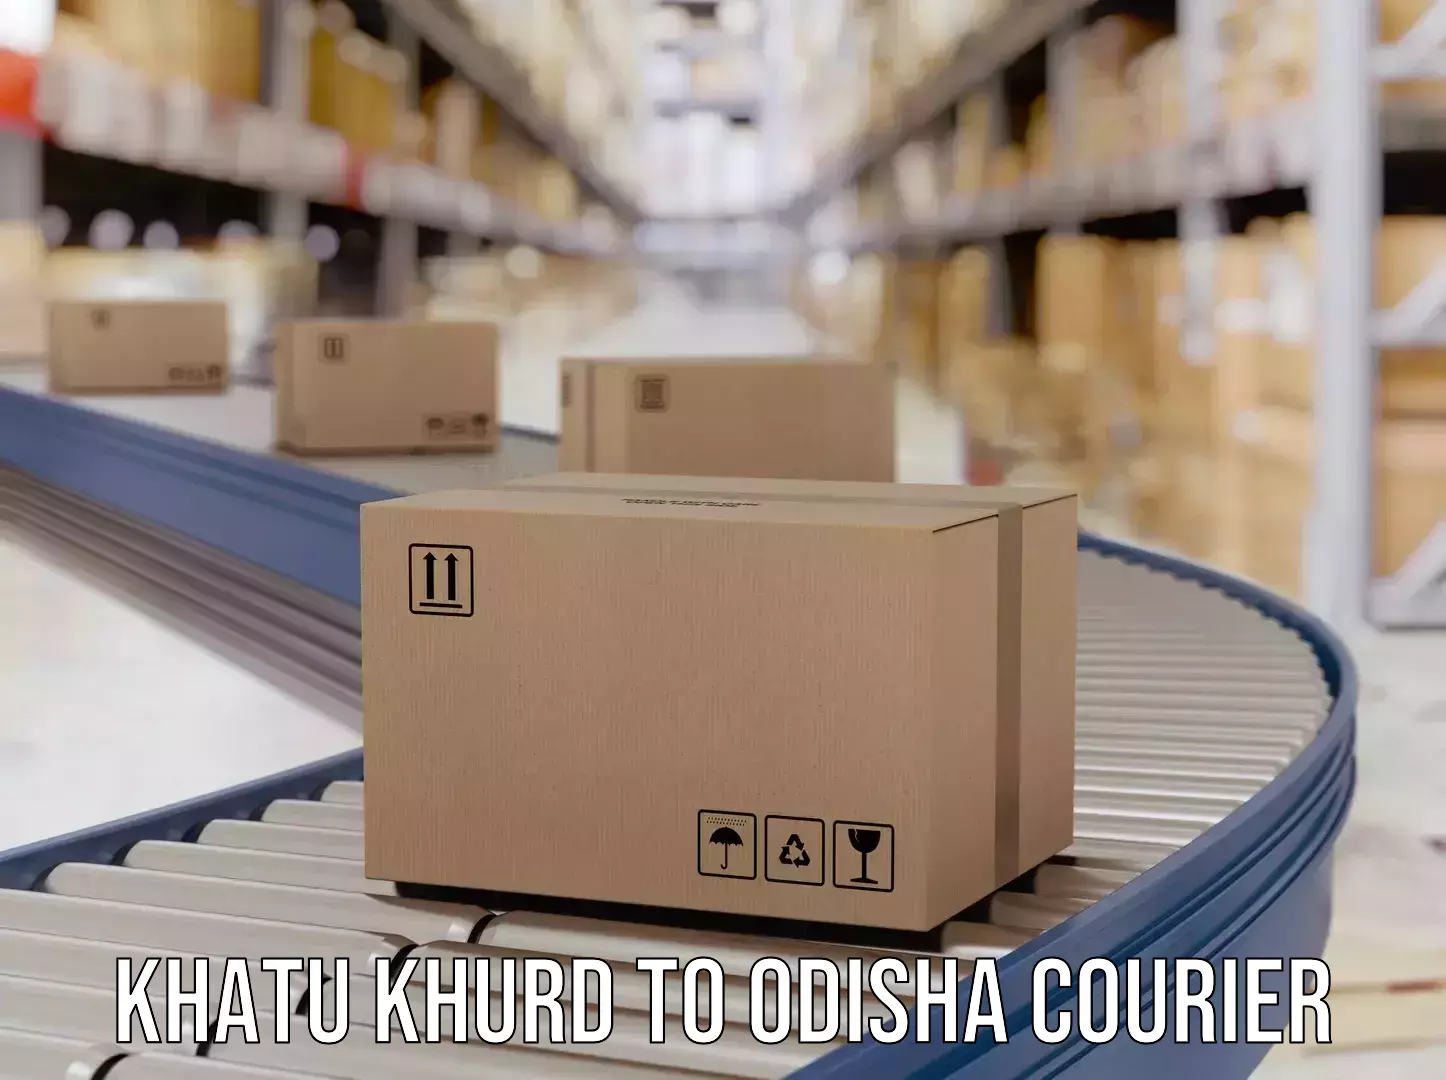 Global courier networks Khatu Khurd to Kosagumuda